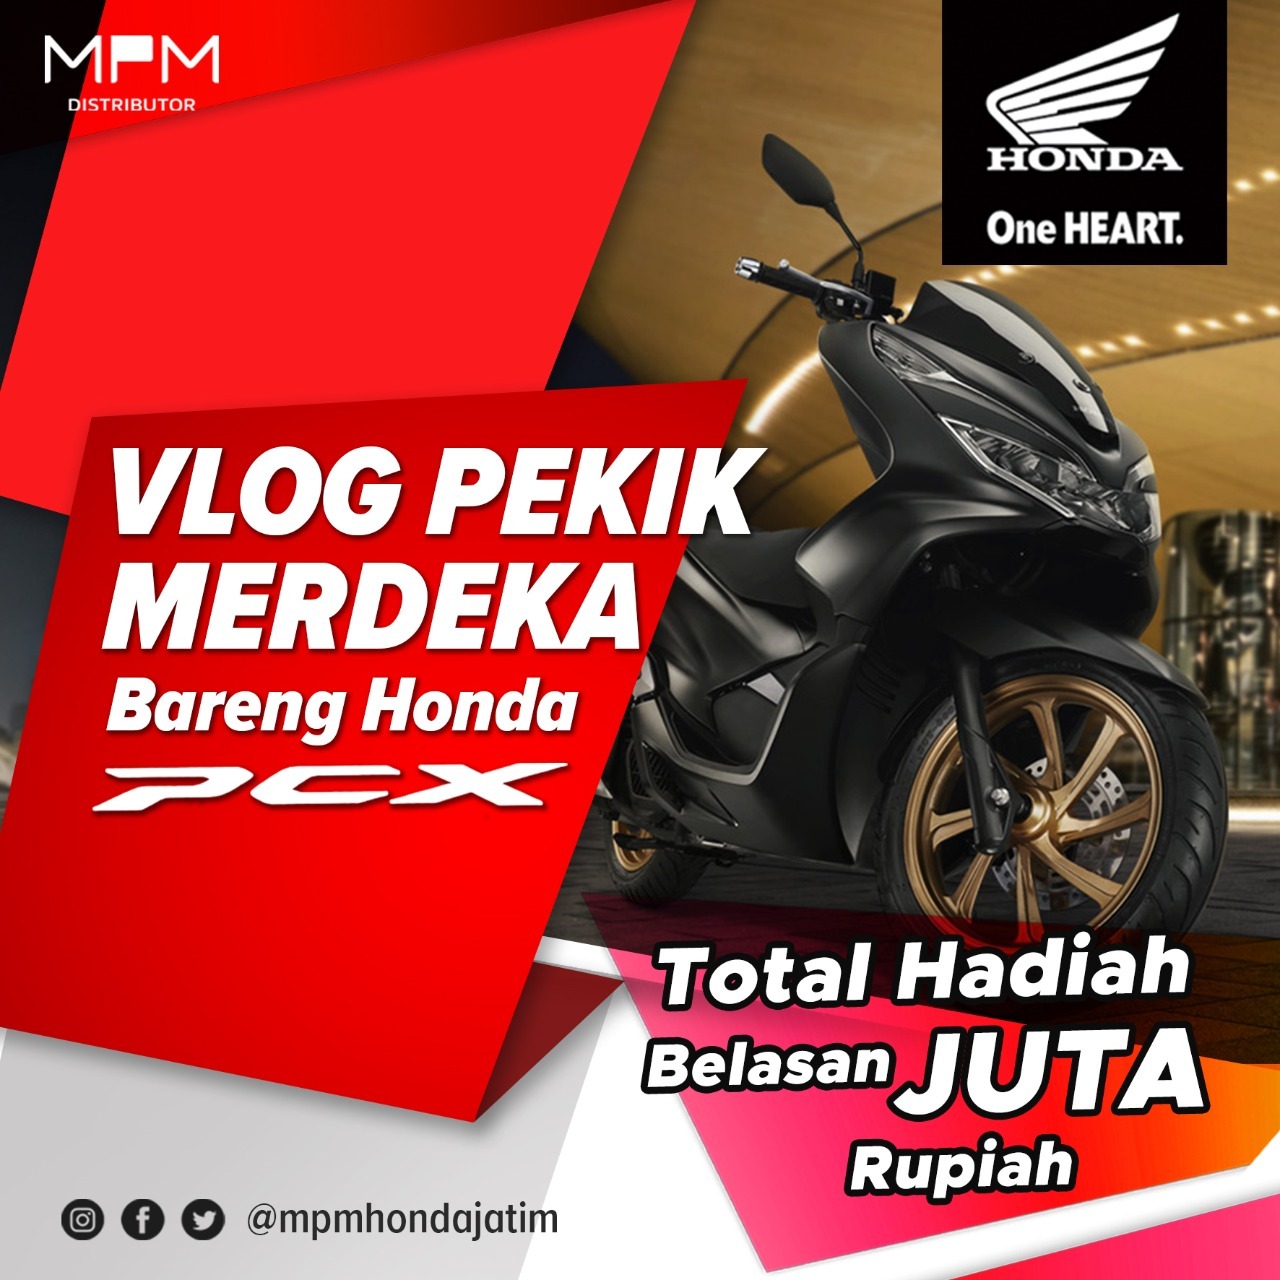 MPM Adakan Kompetisi Vlog Pekik Merdeka Berhadiah Jutaan Rupiah